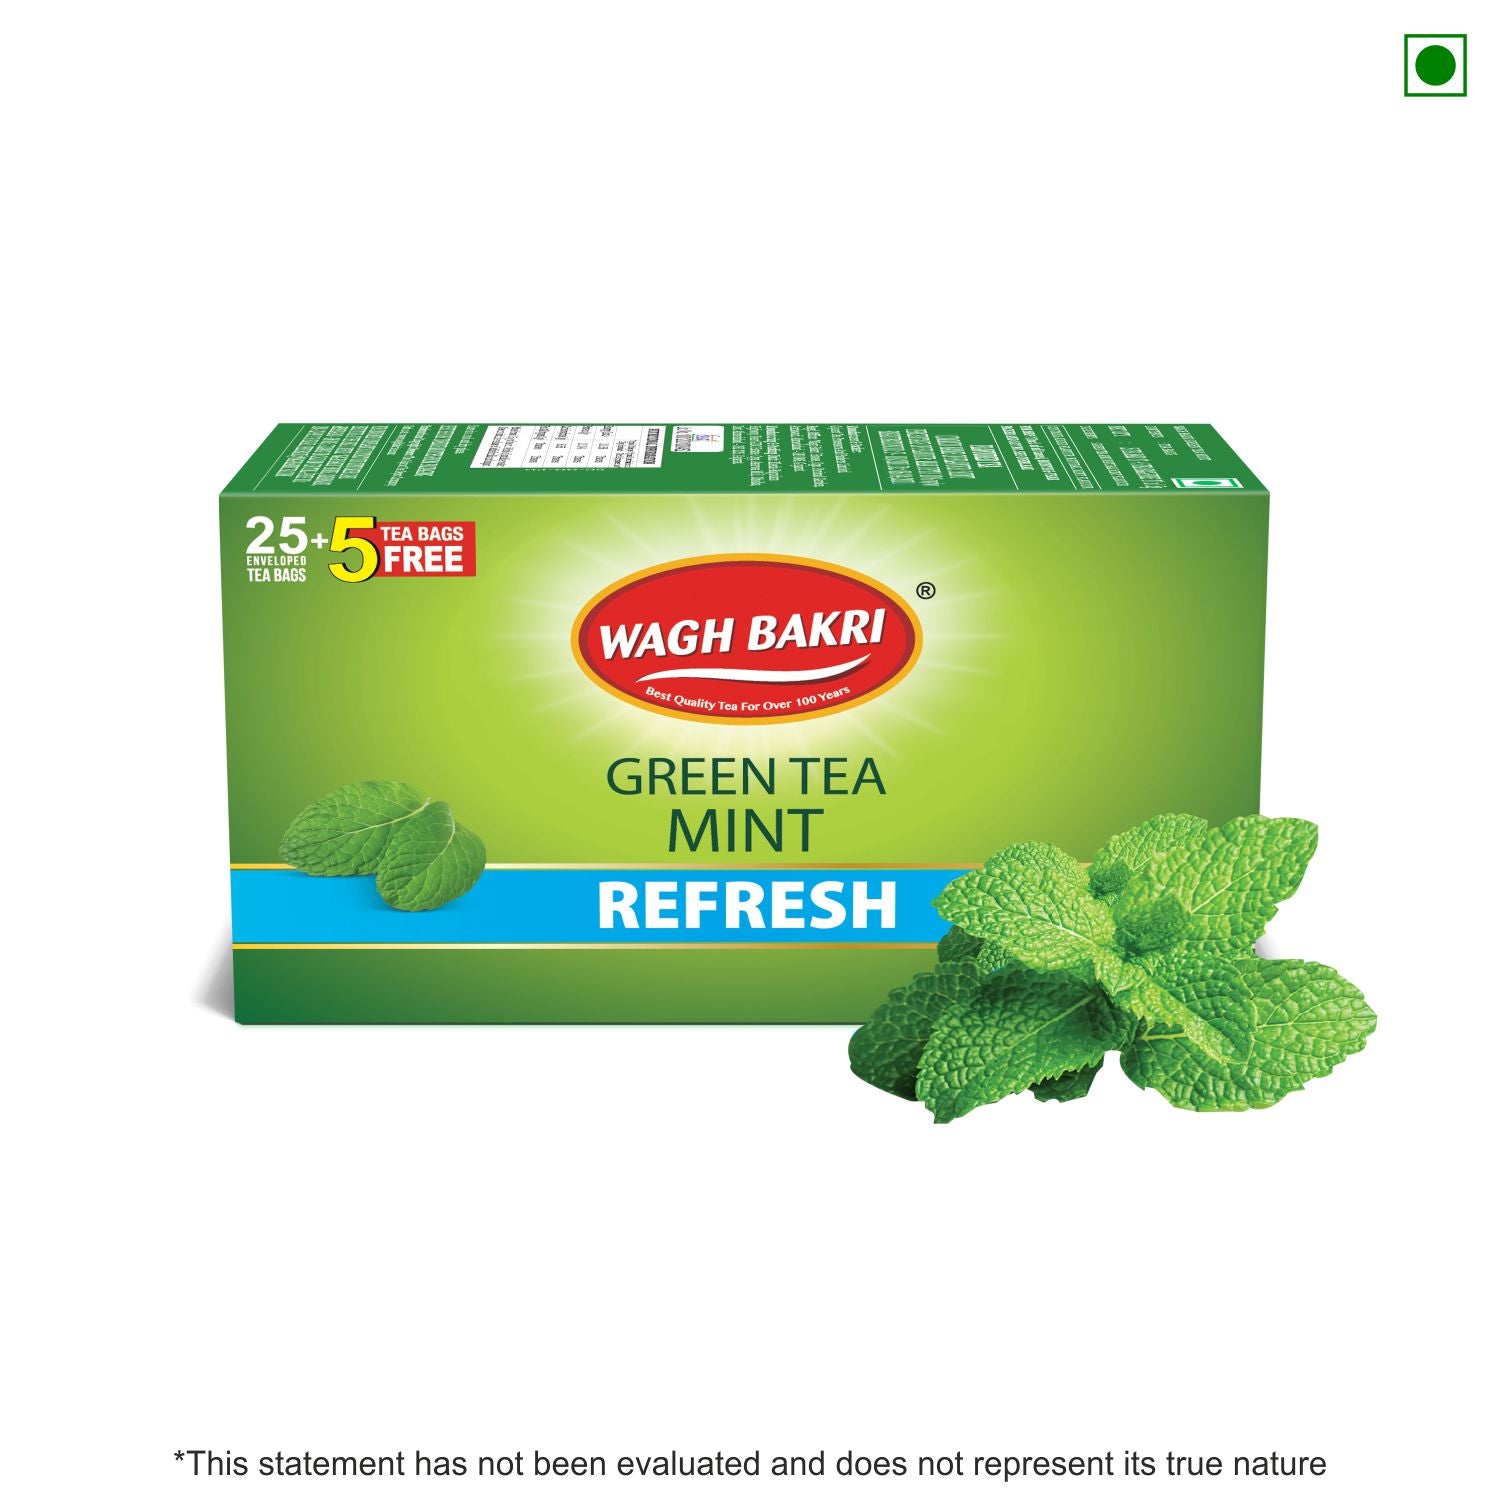 Wagh Bakri Mint Green Tea Bags